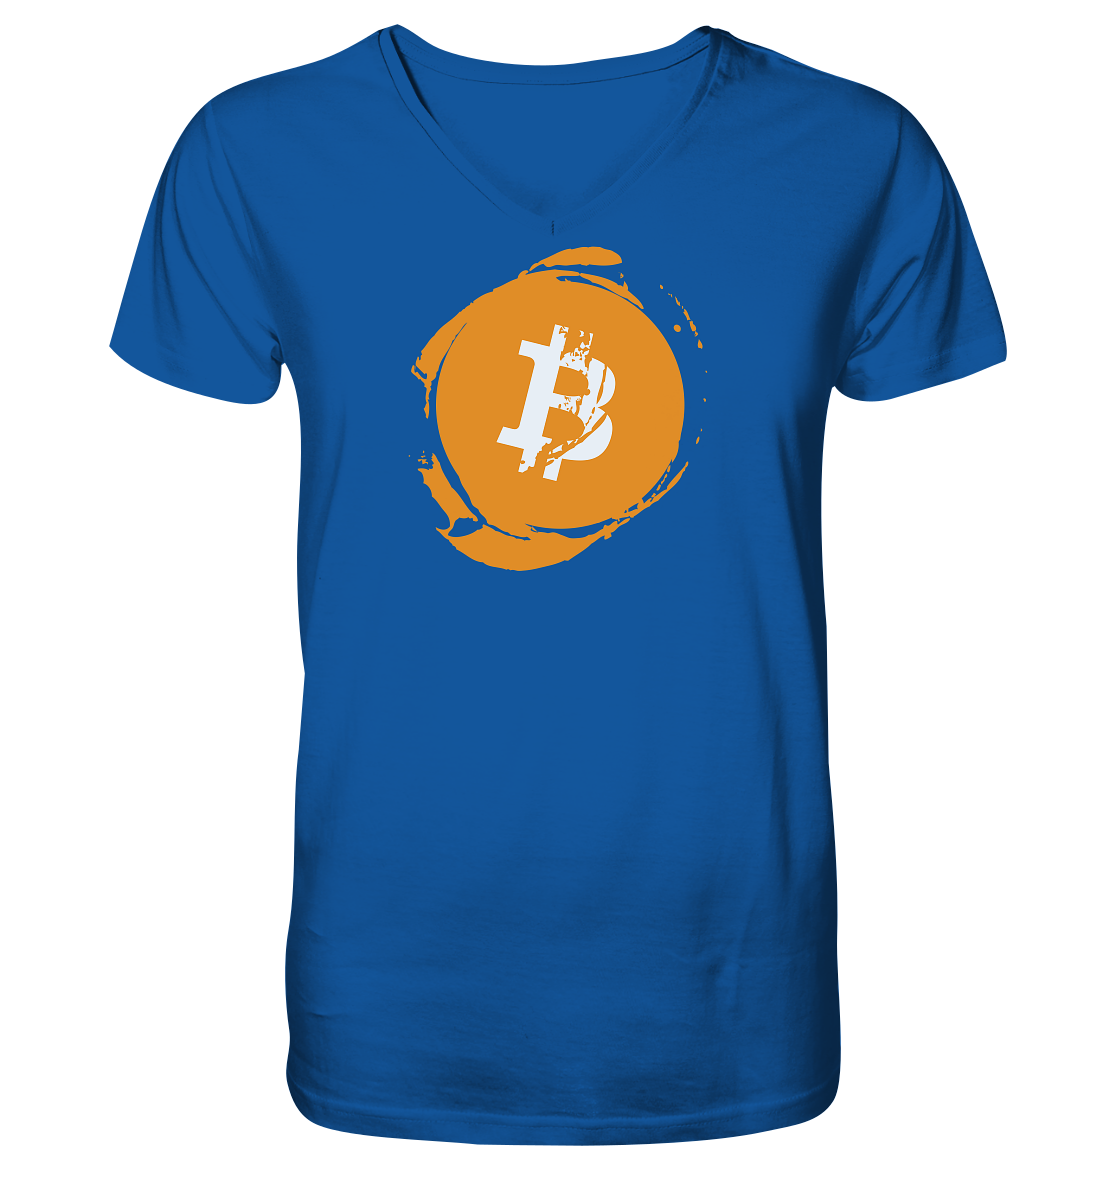 Bitcoin "Stamp"  - Mens Organic V-Neck Shirt